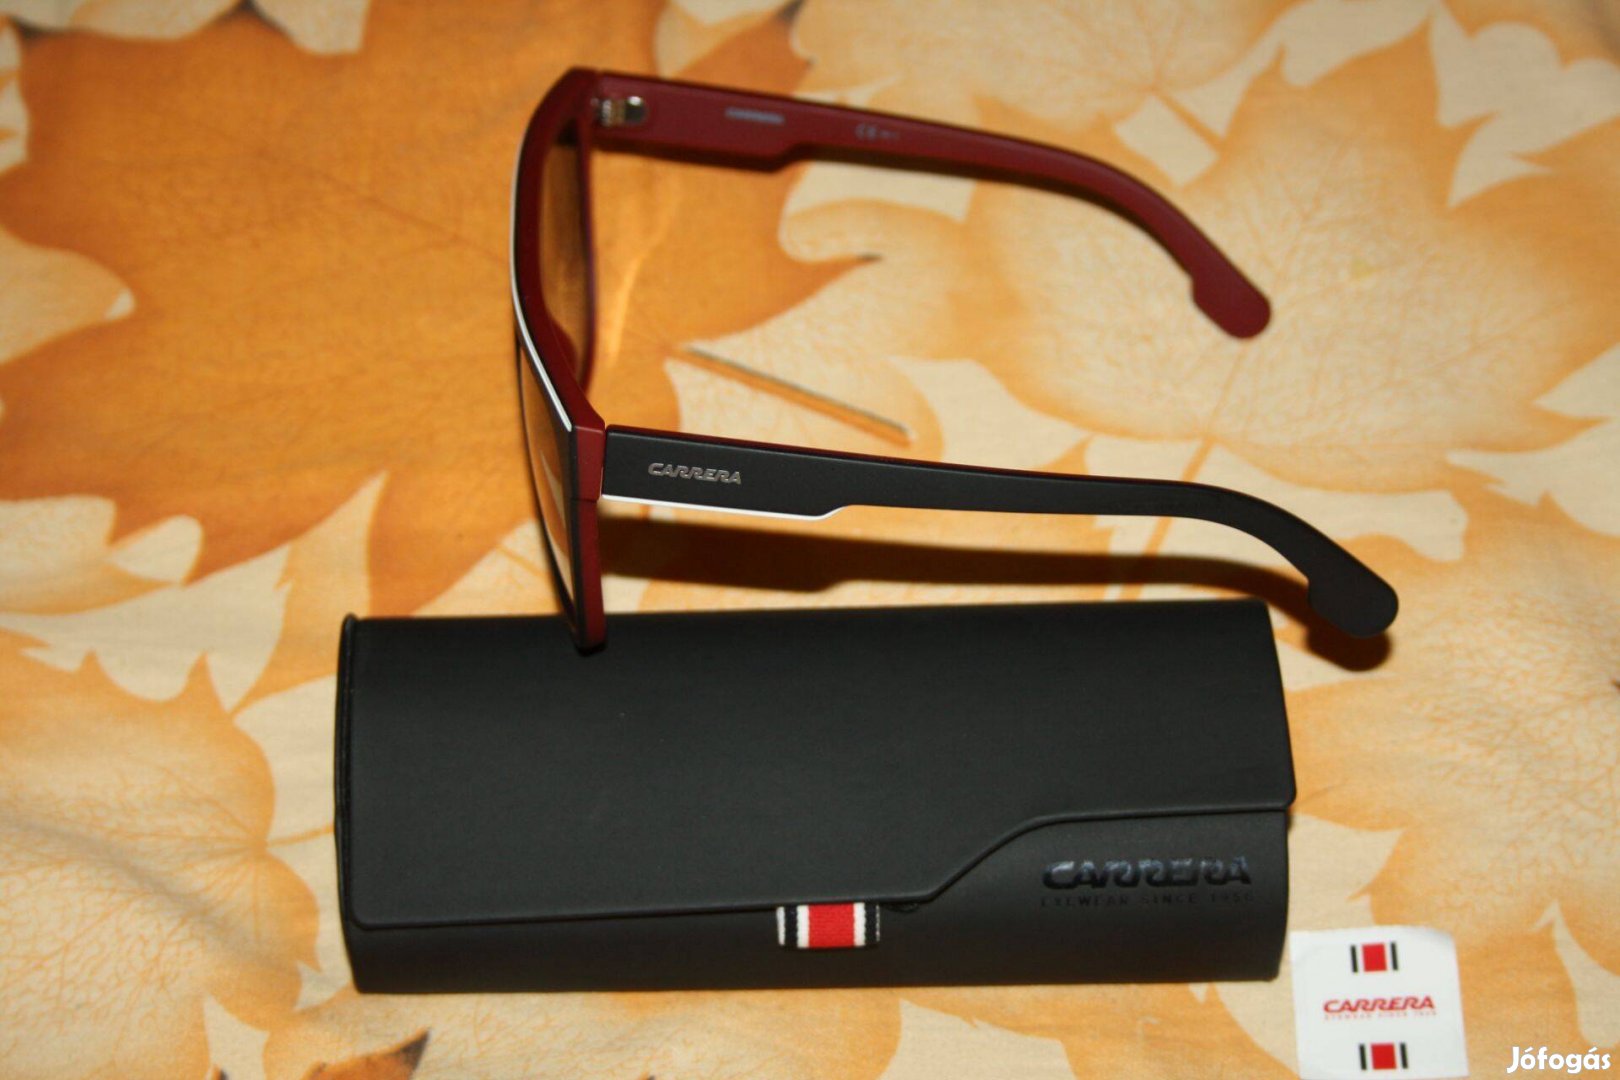 Carrera napszemüveg eredeti Új dobozban